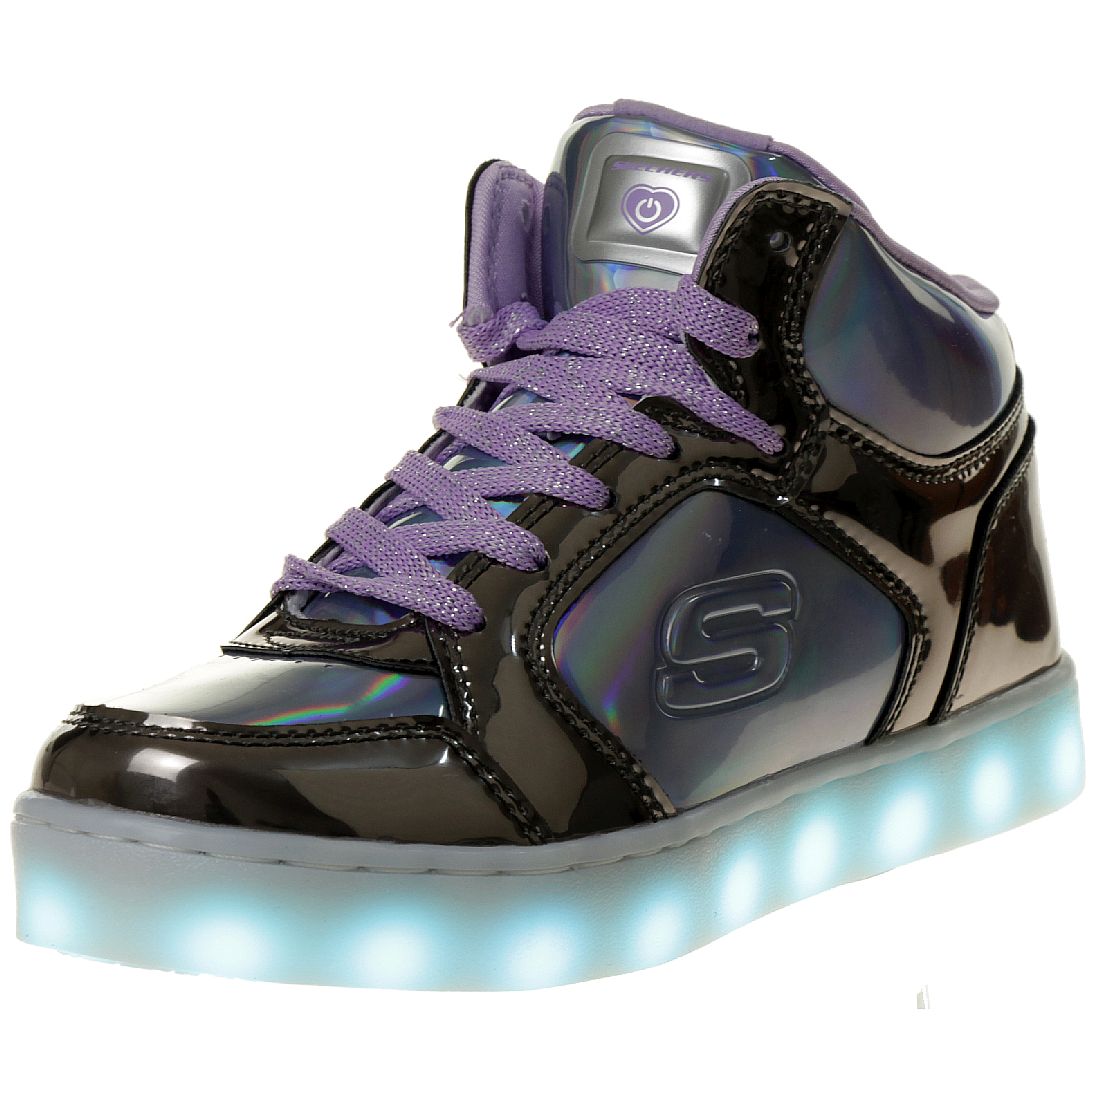 Skechers S LIGHTS: ENERGY LIGHTS SHINY BRIGHTS LED Sneakers Kinderschuhe Blinkschuhe